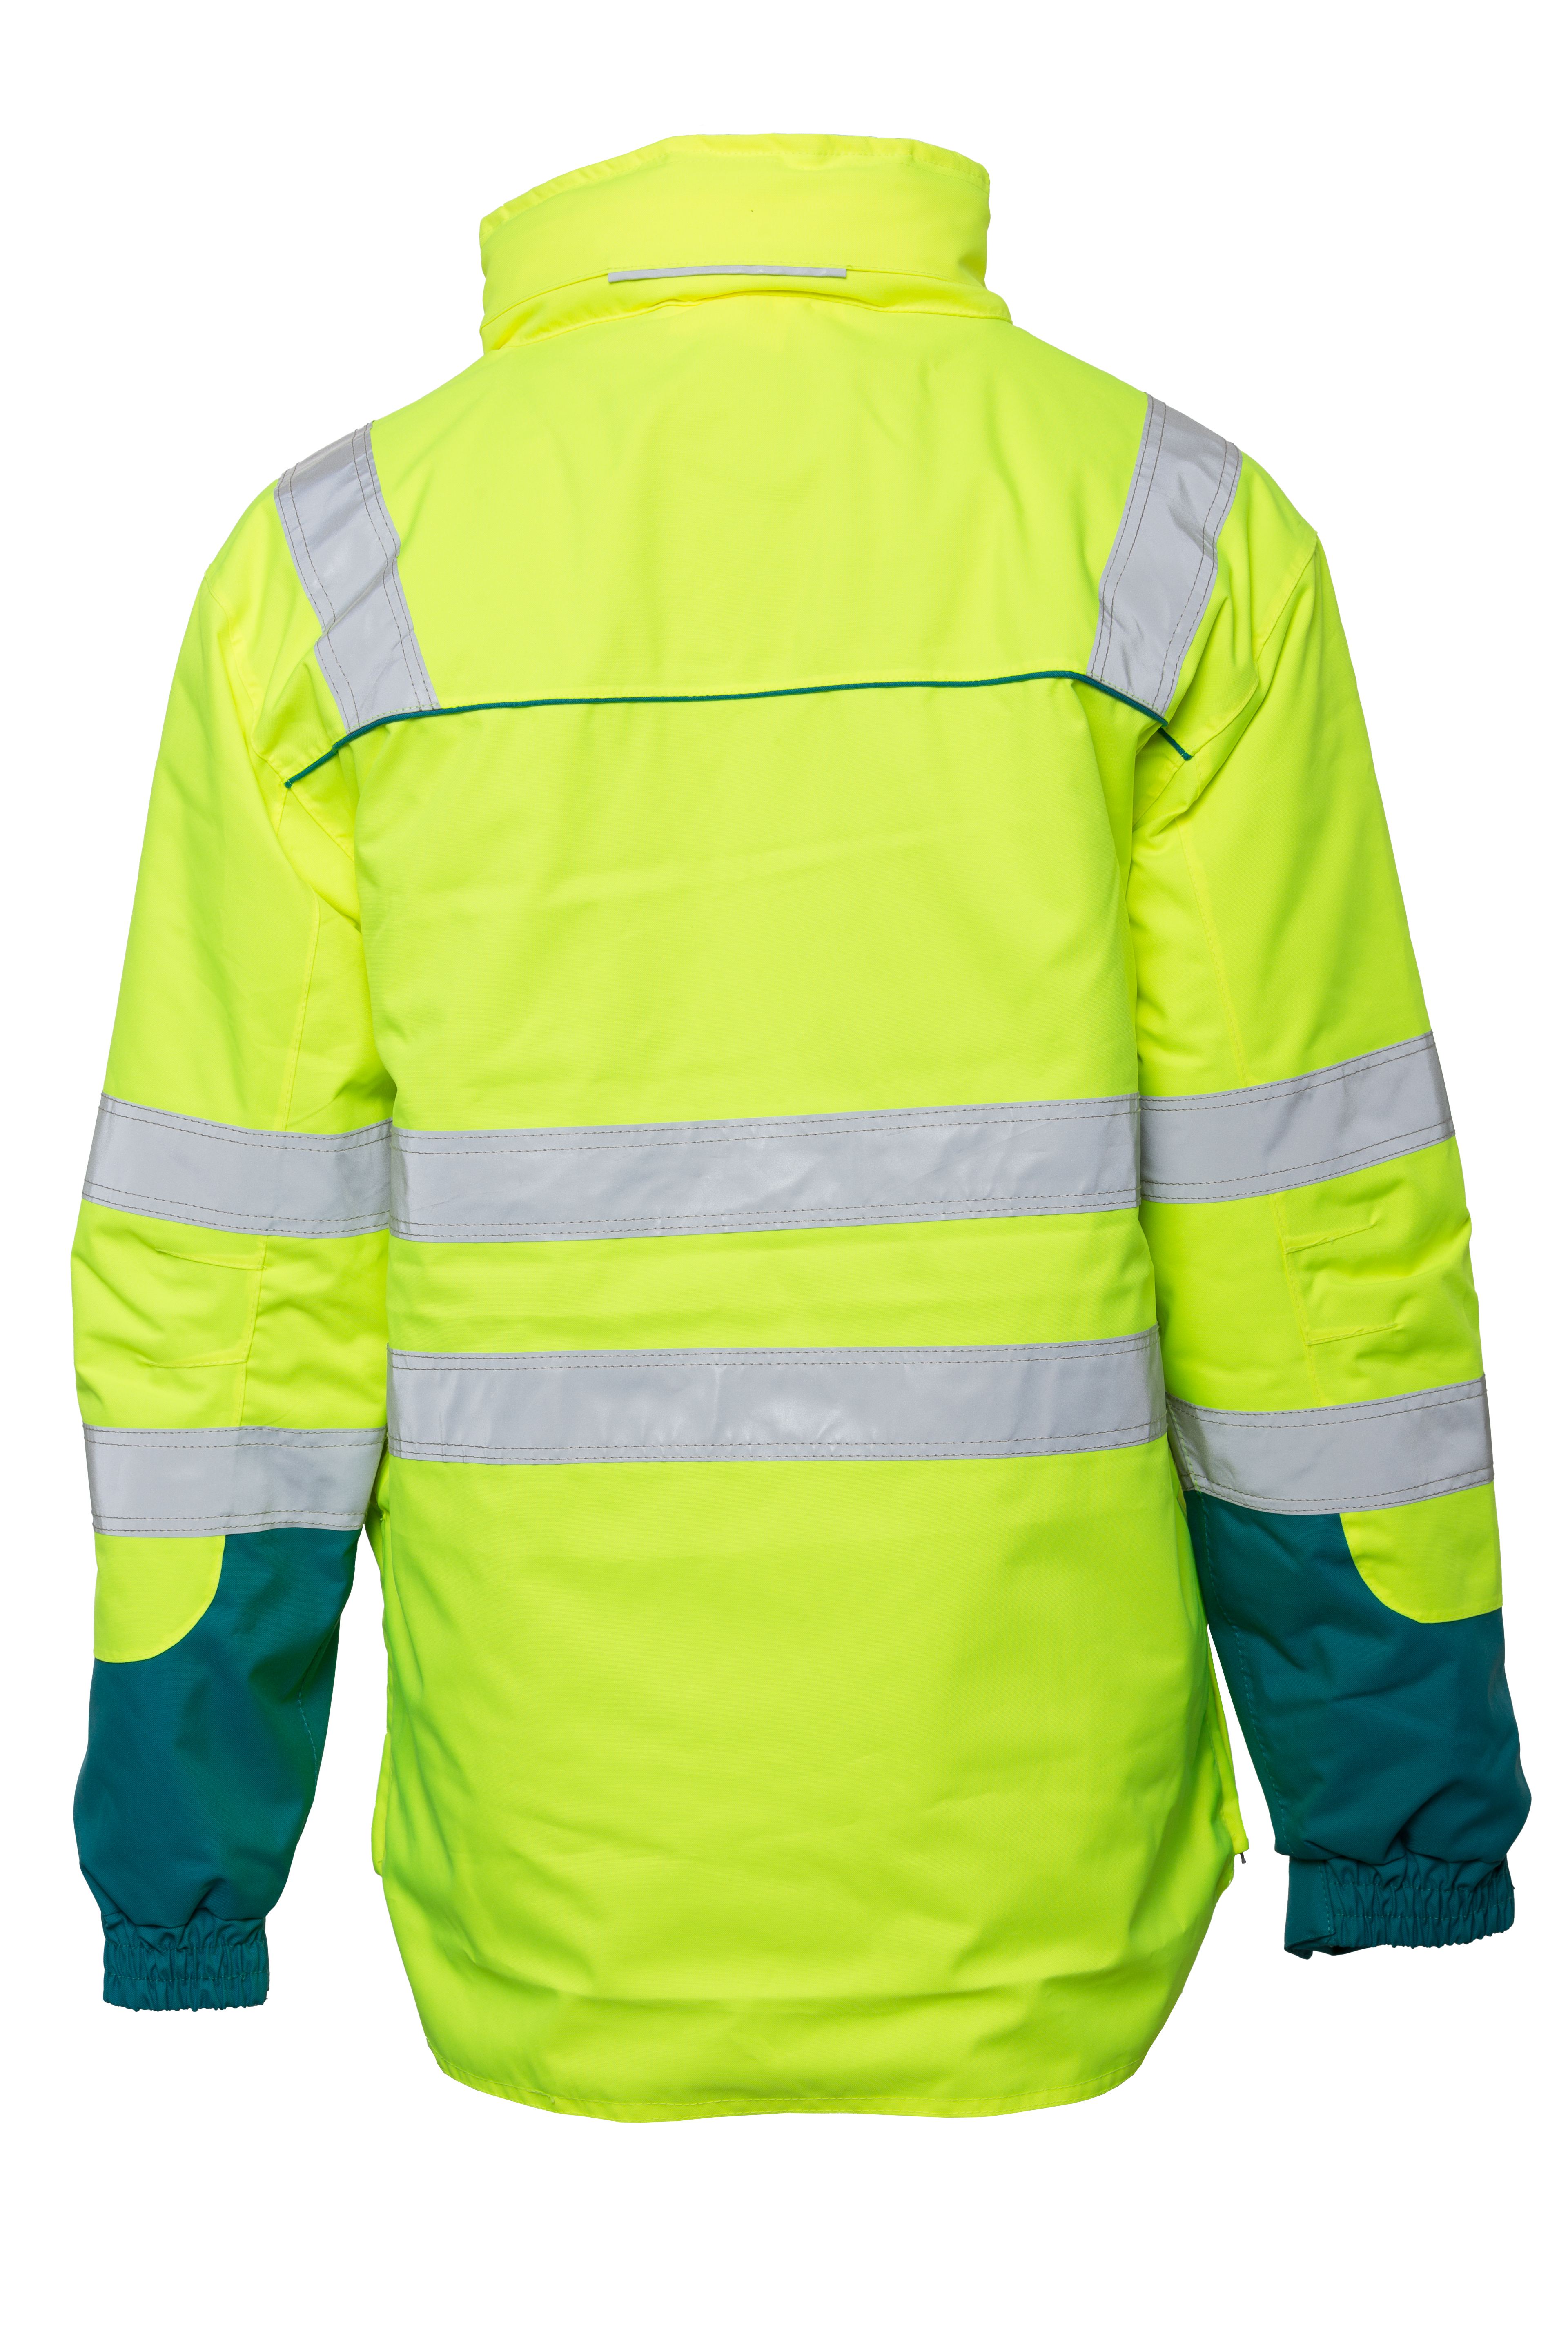 Rescuewear Midi-Parker Dynamic HiVis Klasse 3 Enamelblau / Neon Gelb - L